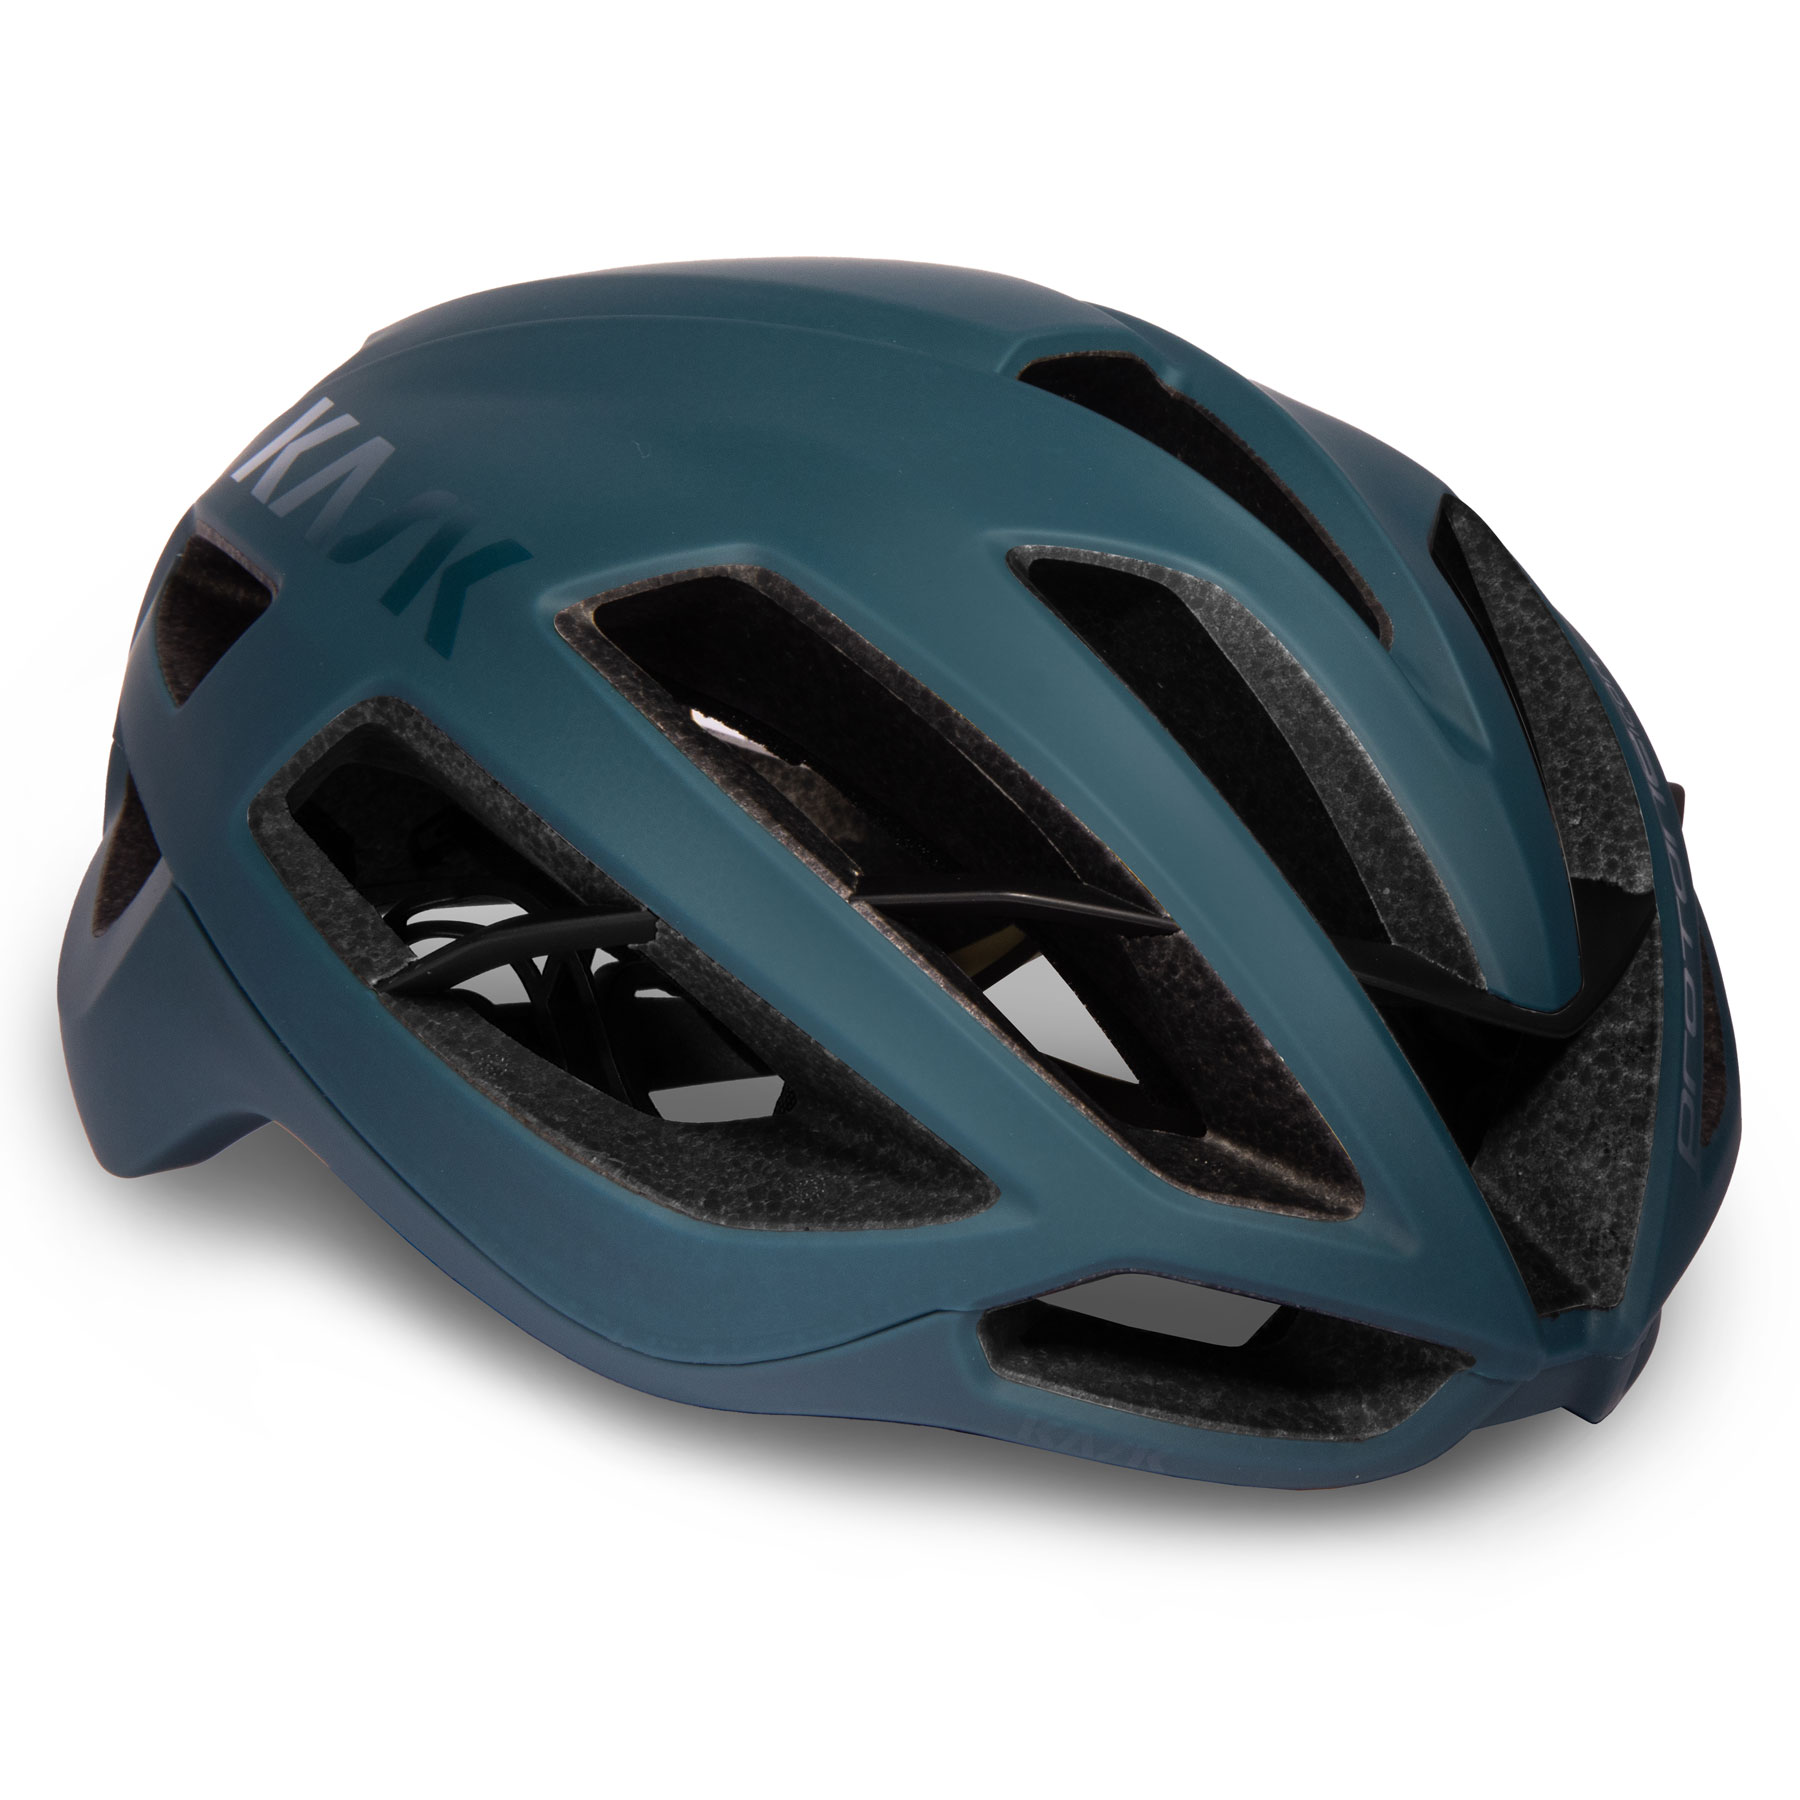 Picture of KASK Protone Icon WG11 Road Helmet - Forest Green Matt